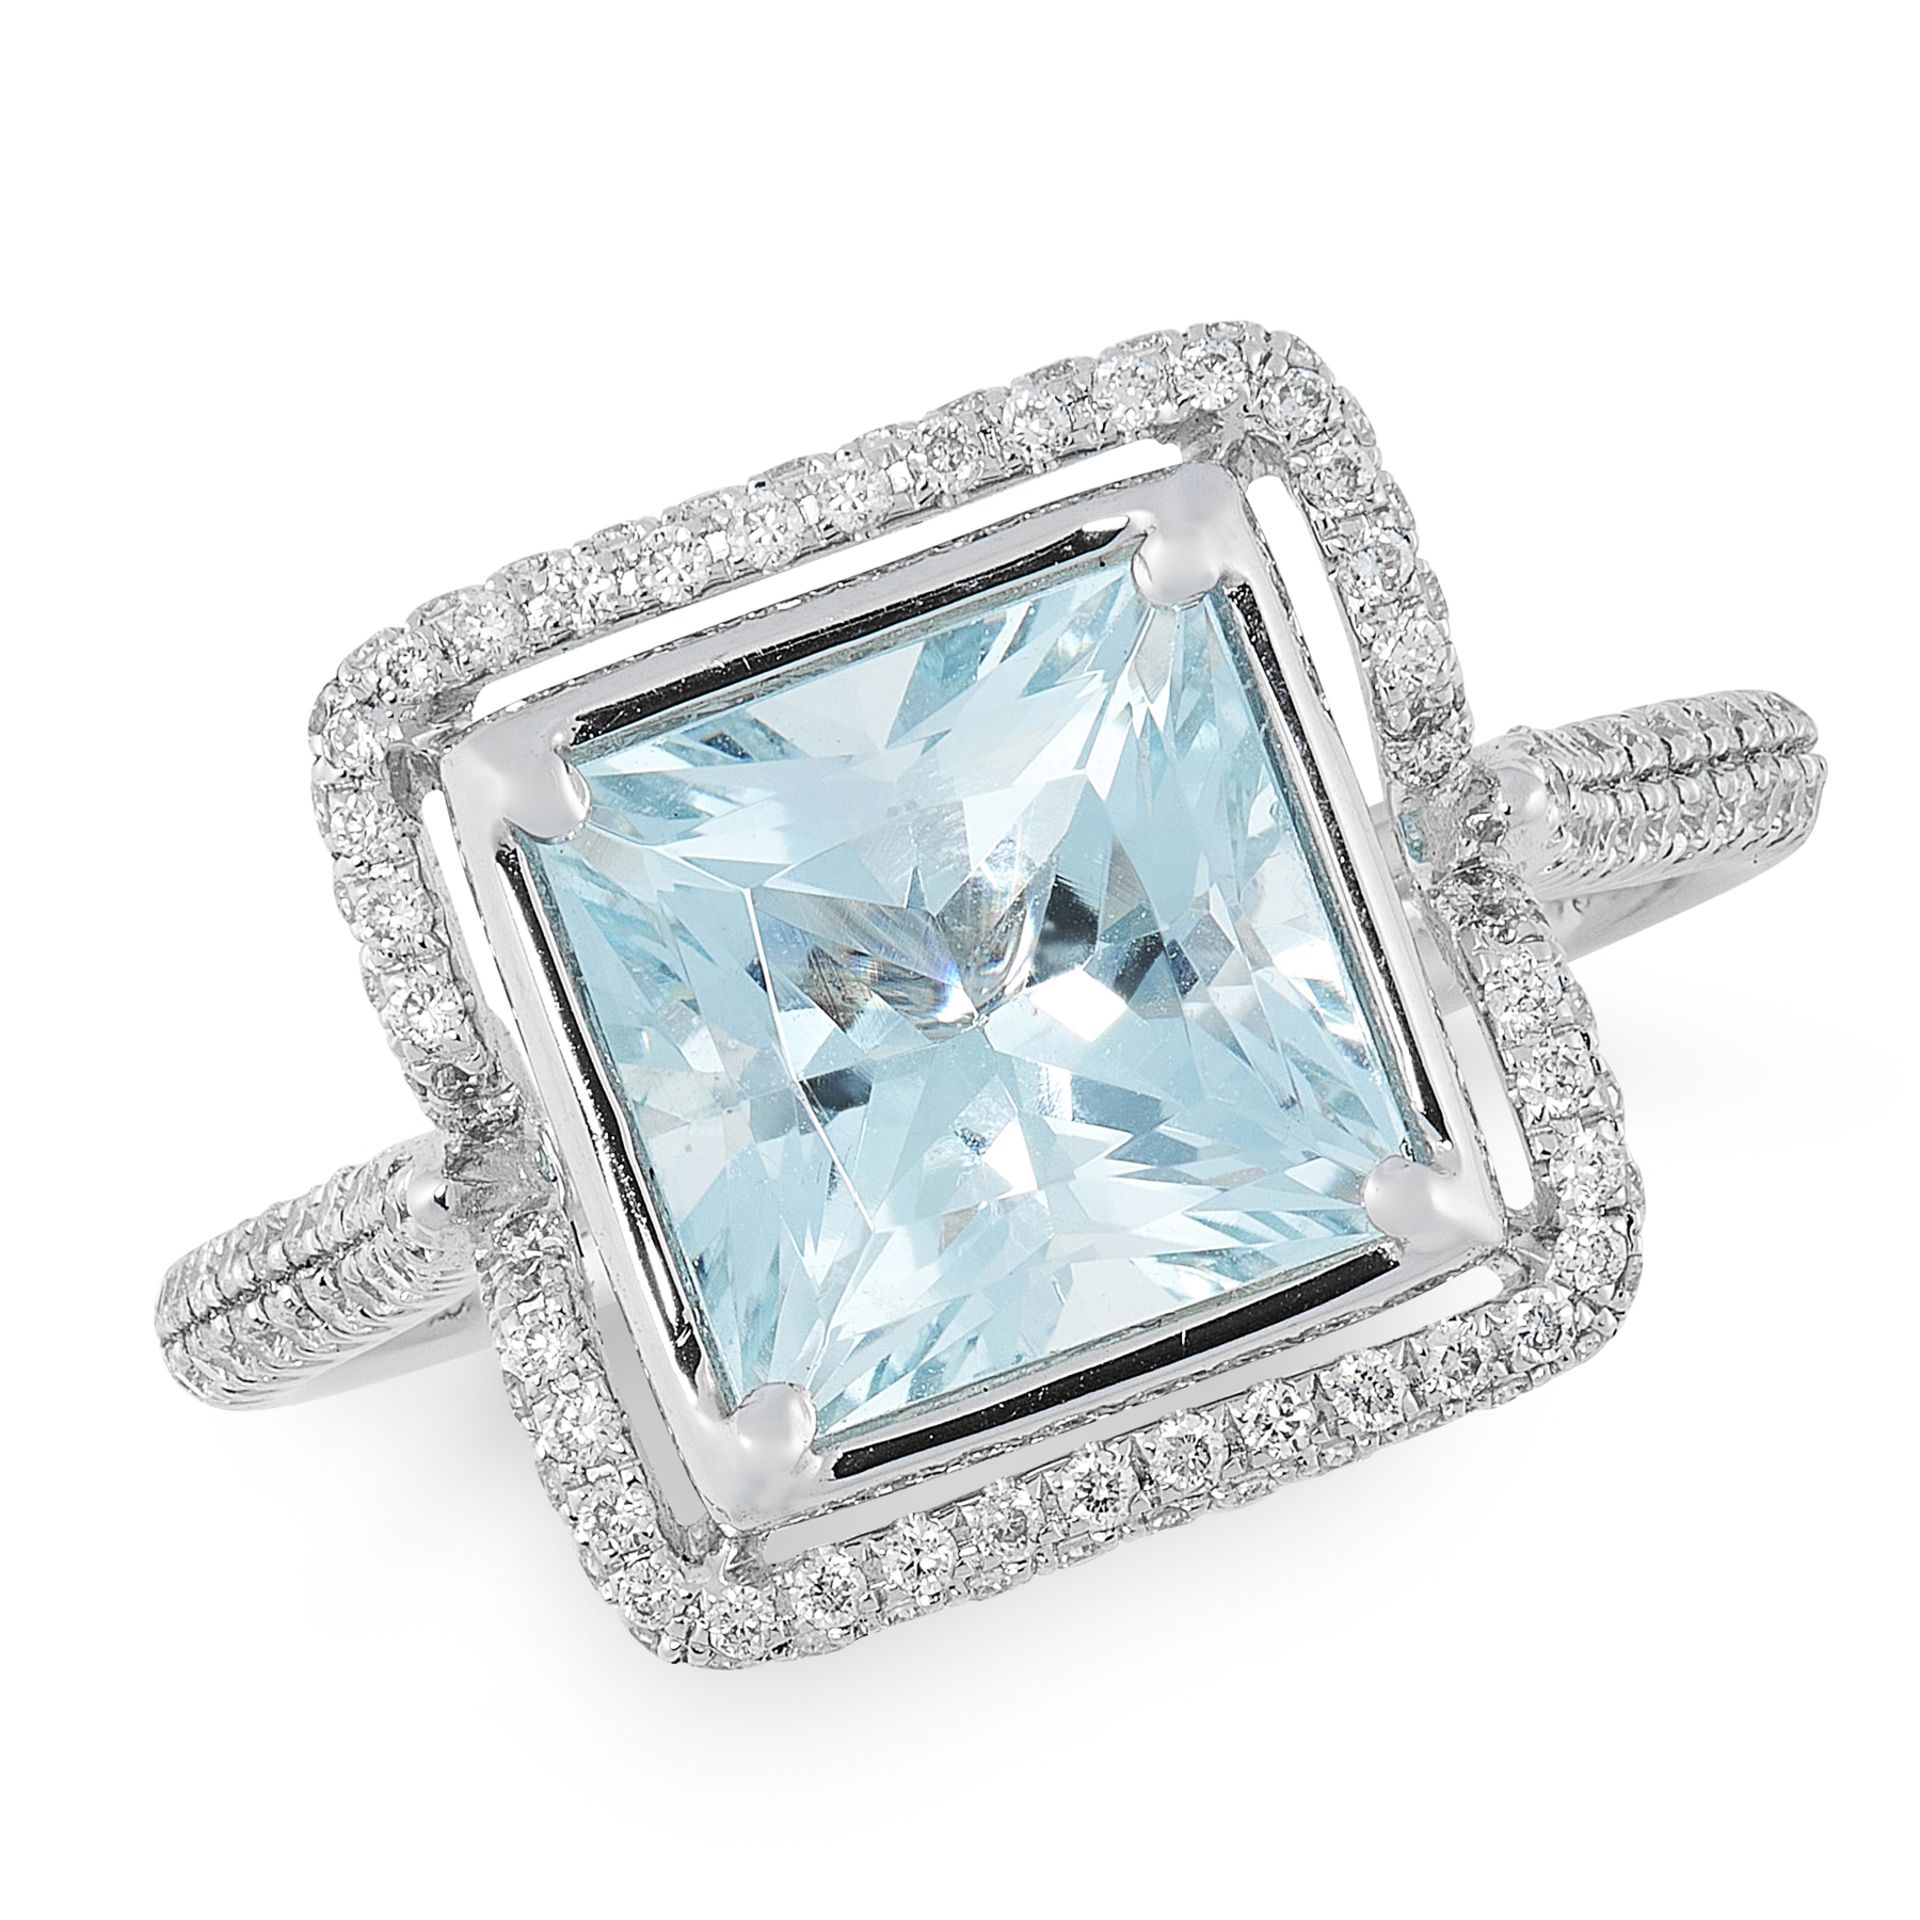 AN AQUAMARINE AND DIAMOND DRESS RING set with a princess cut aquamarine of 2.95 carats within a